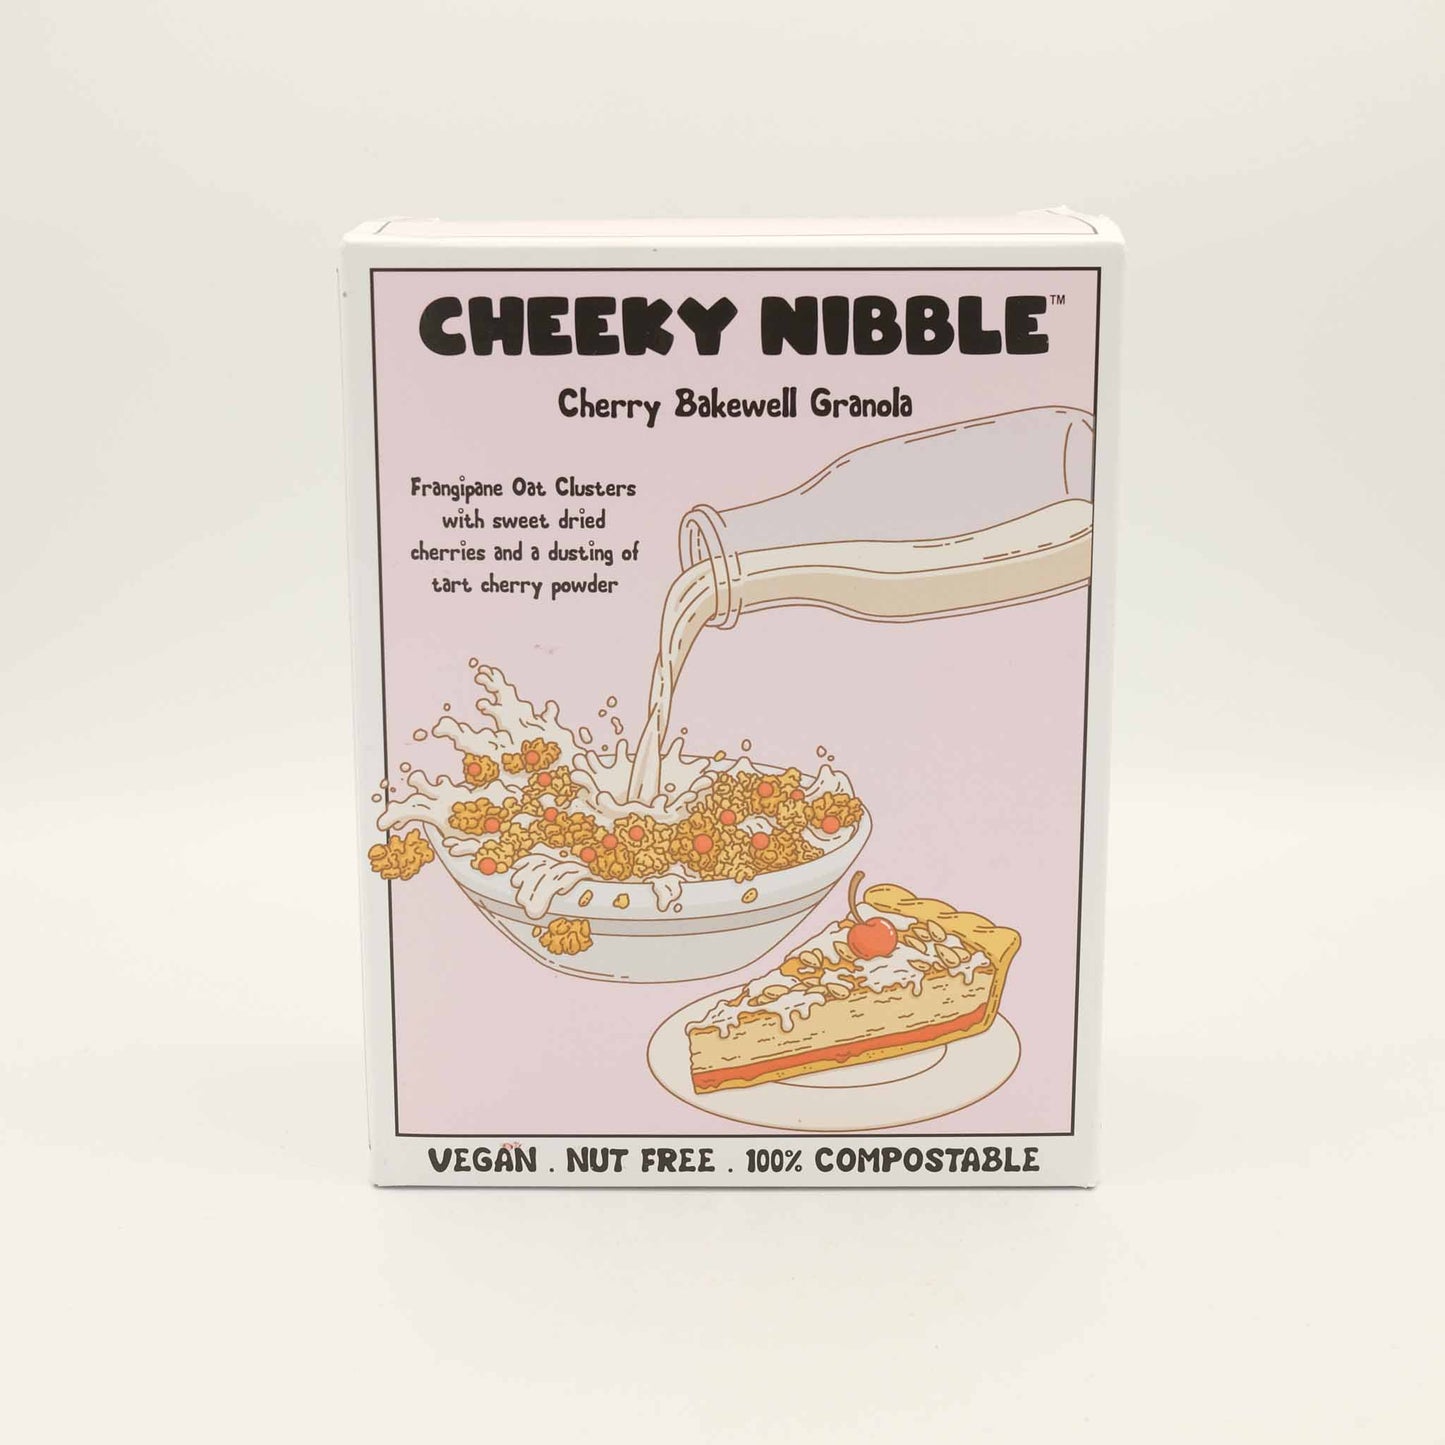 Cheeky Nibble Granola Cherry Bakewell